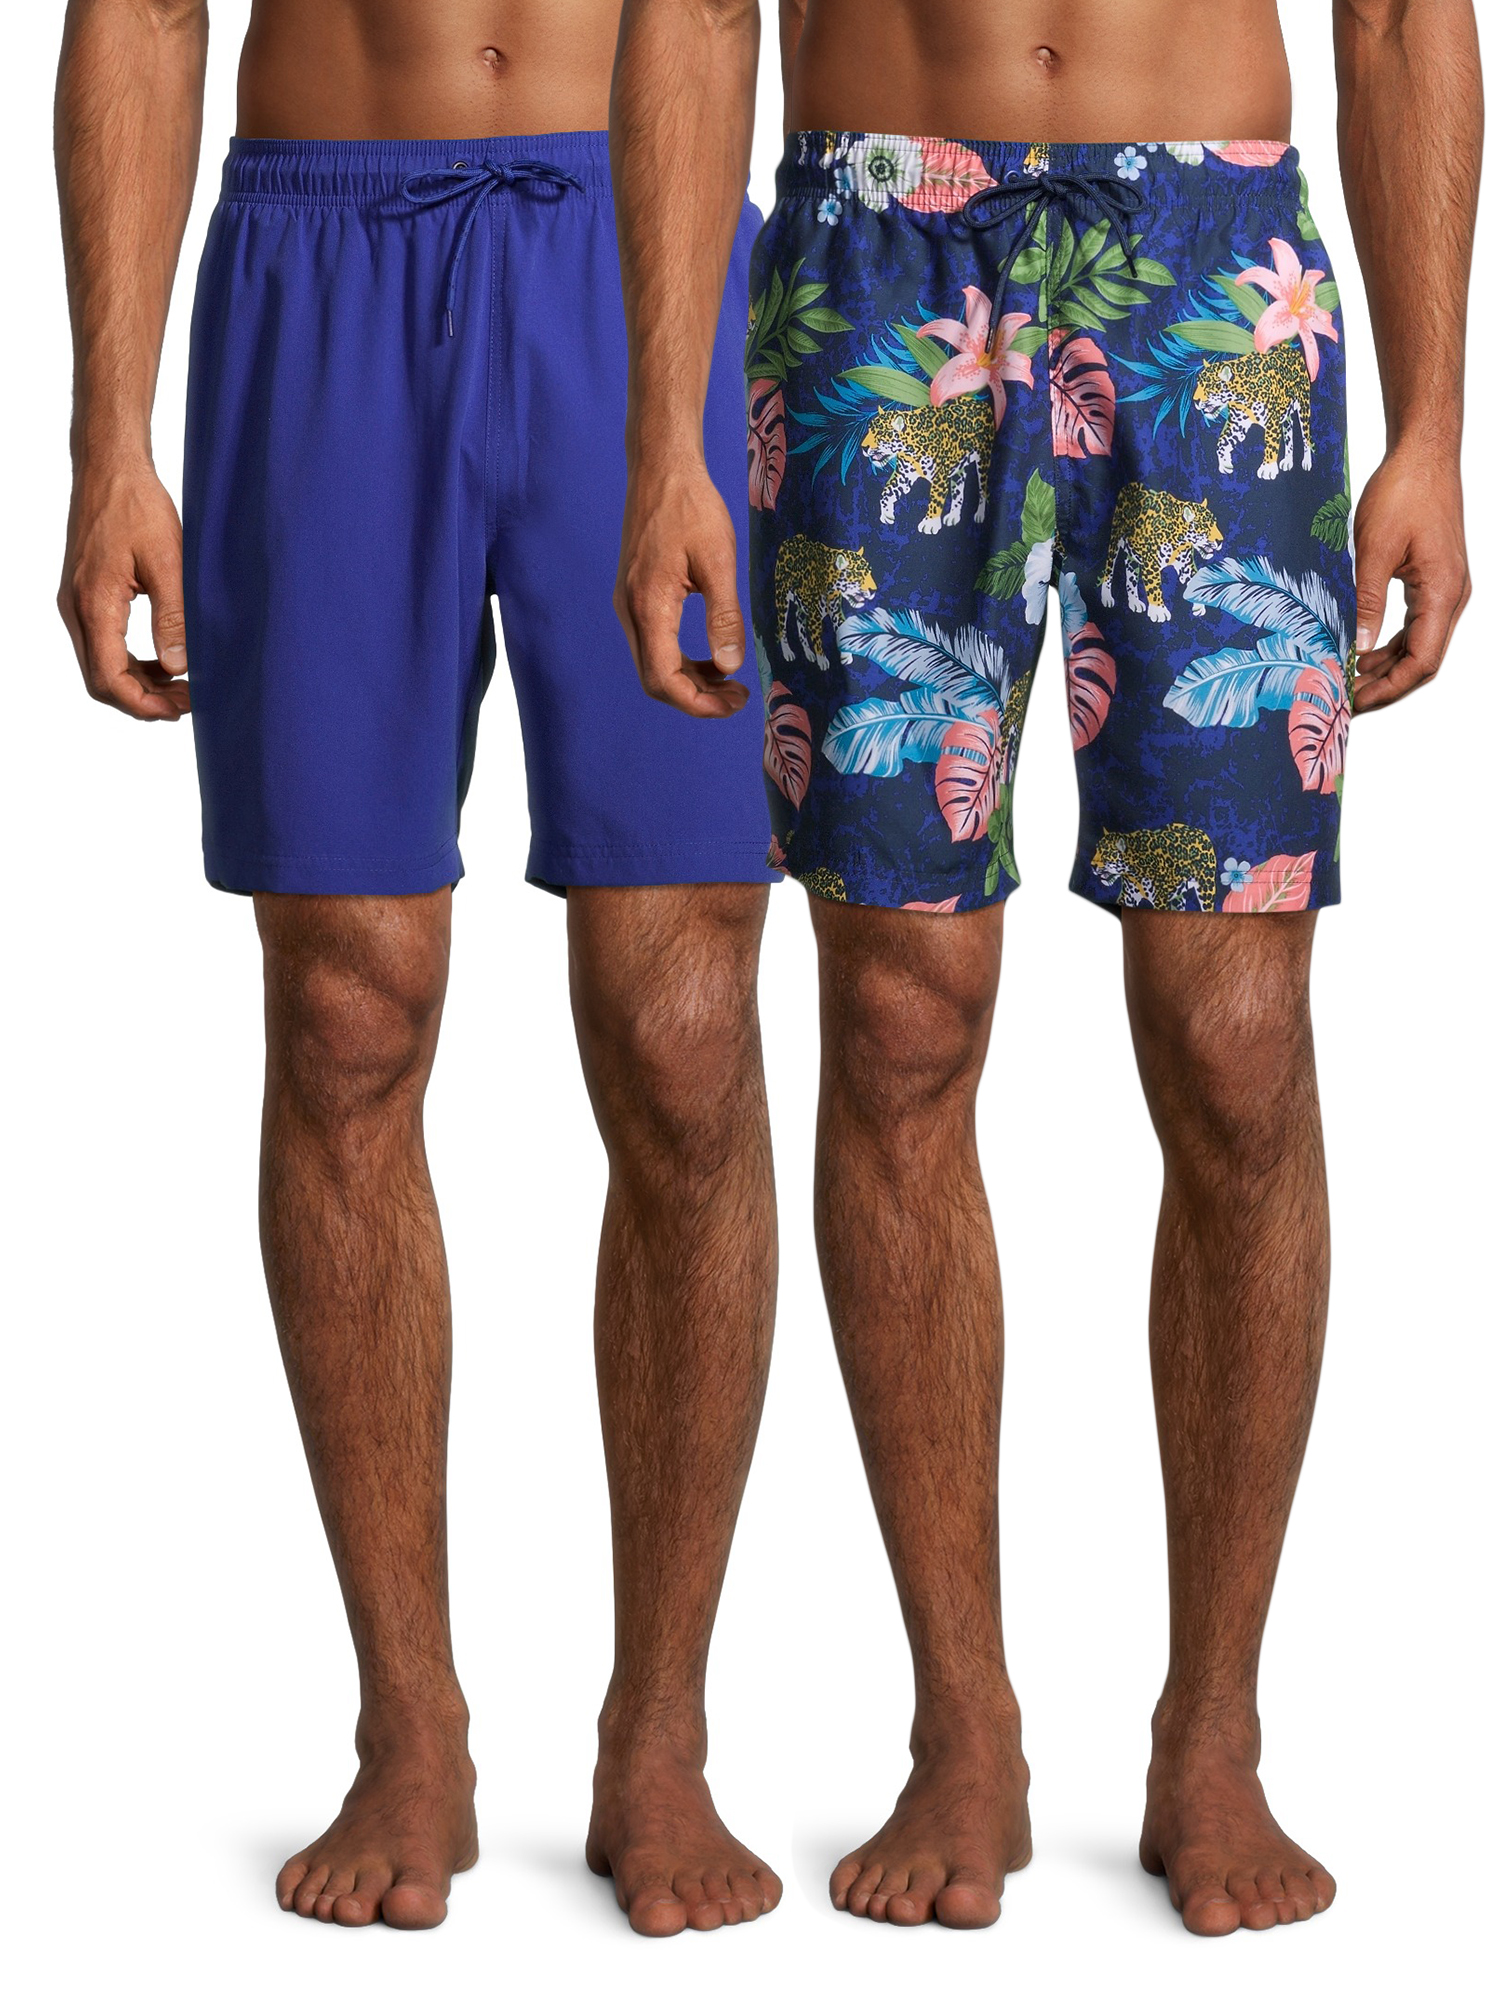 G-III Sports Mens Summer Quick Dry 3D Print Swim Trunks with Mesh Lining Swim Suit